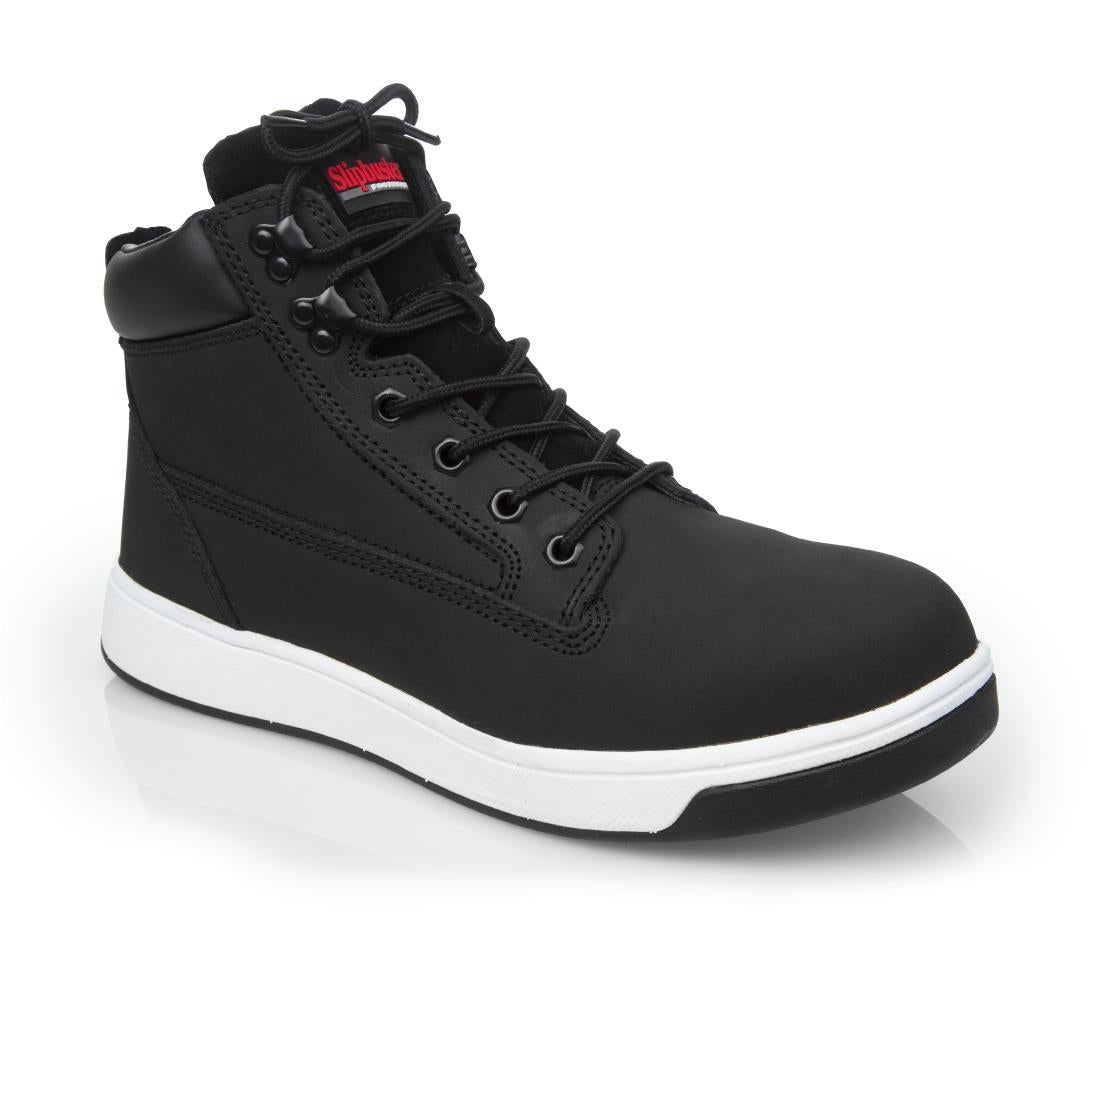 BB422-43 Slipbuster Sneaker Boots Black 43 JD Catering Equipment Solutions Ltd